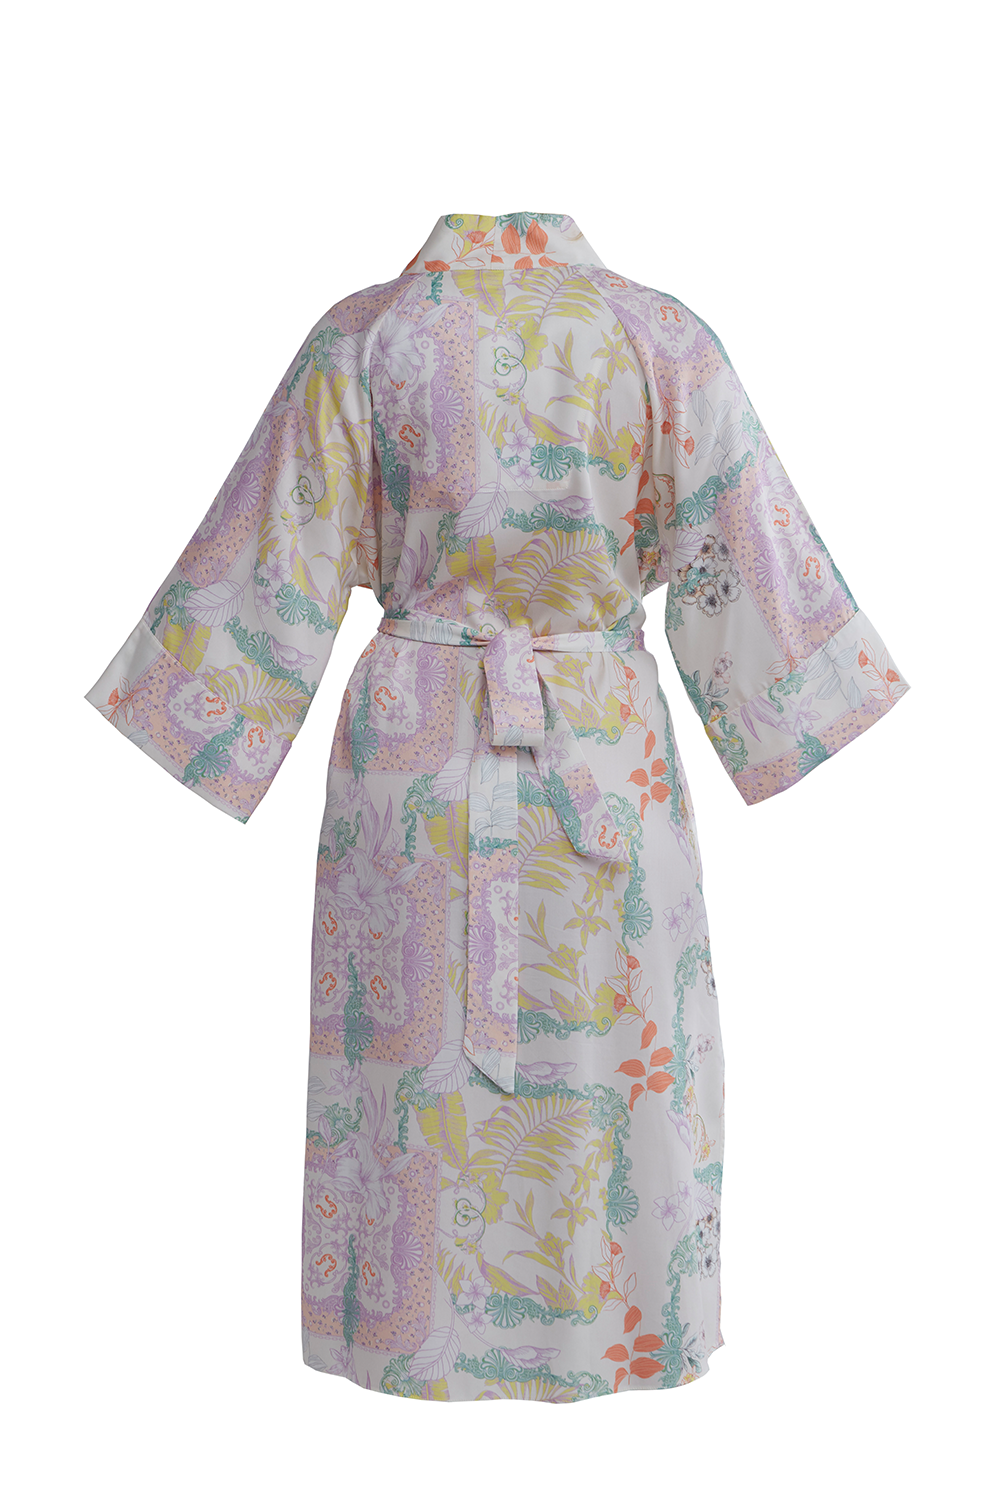 Four Seasons Patch Kimono